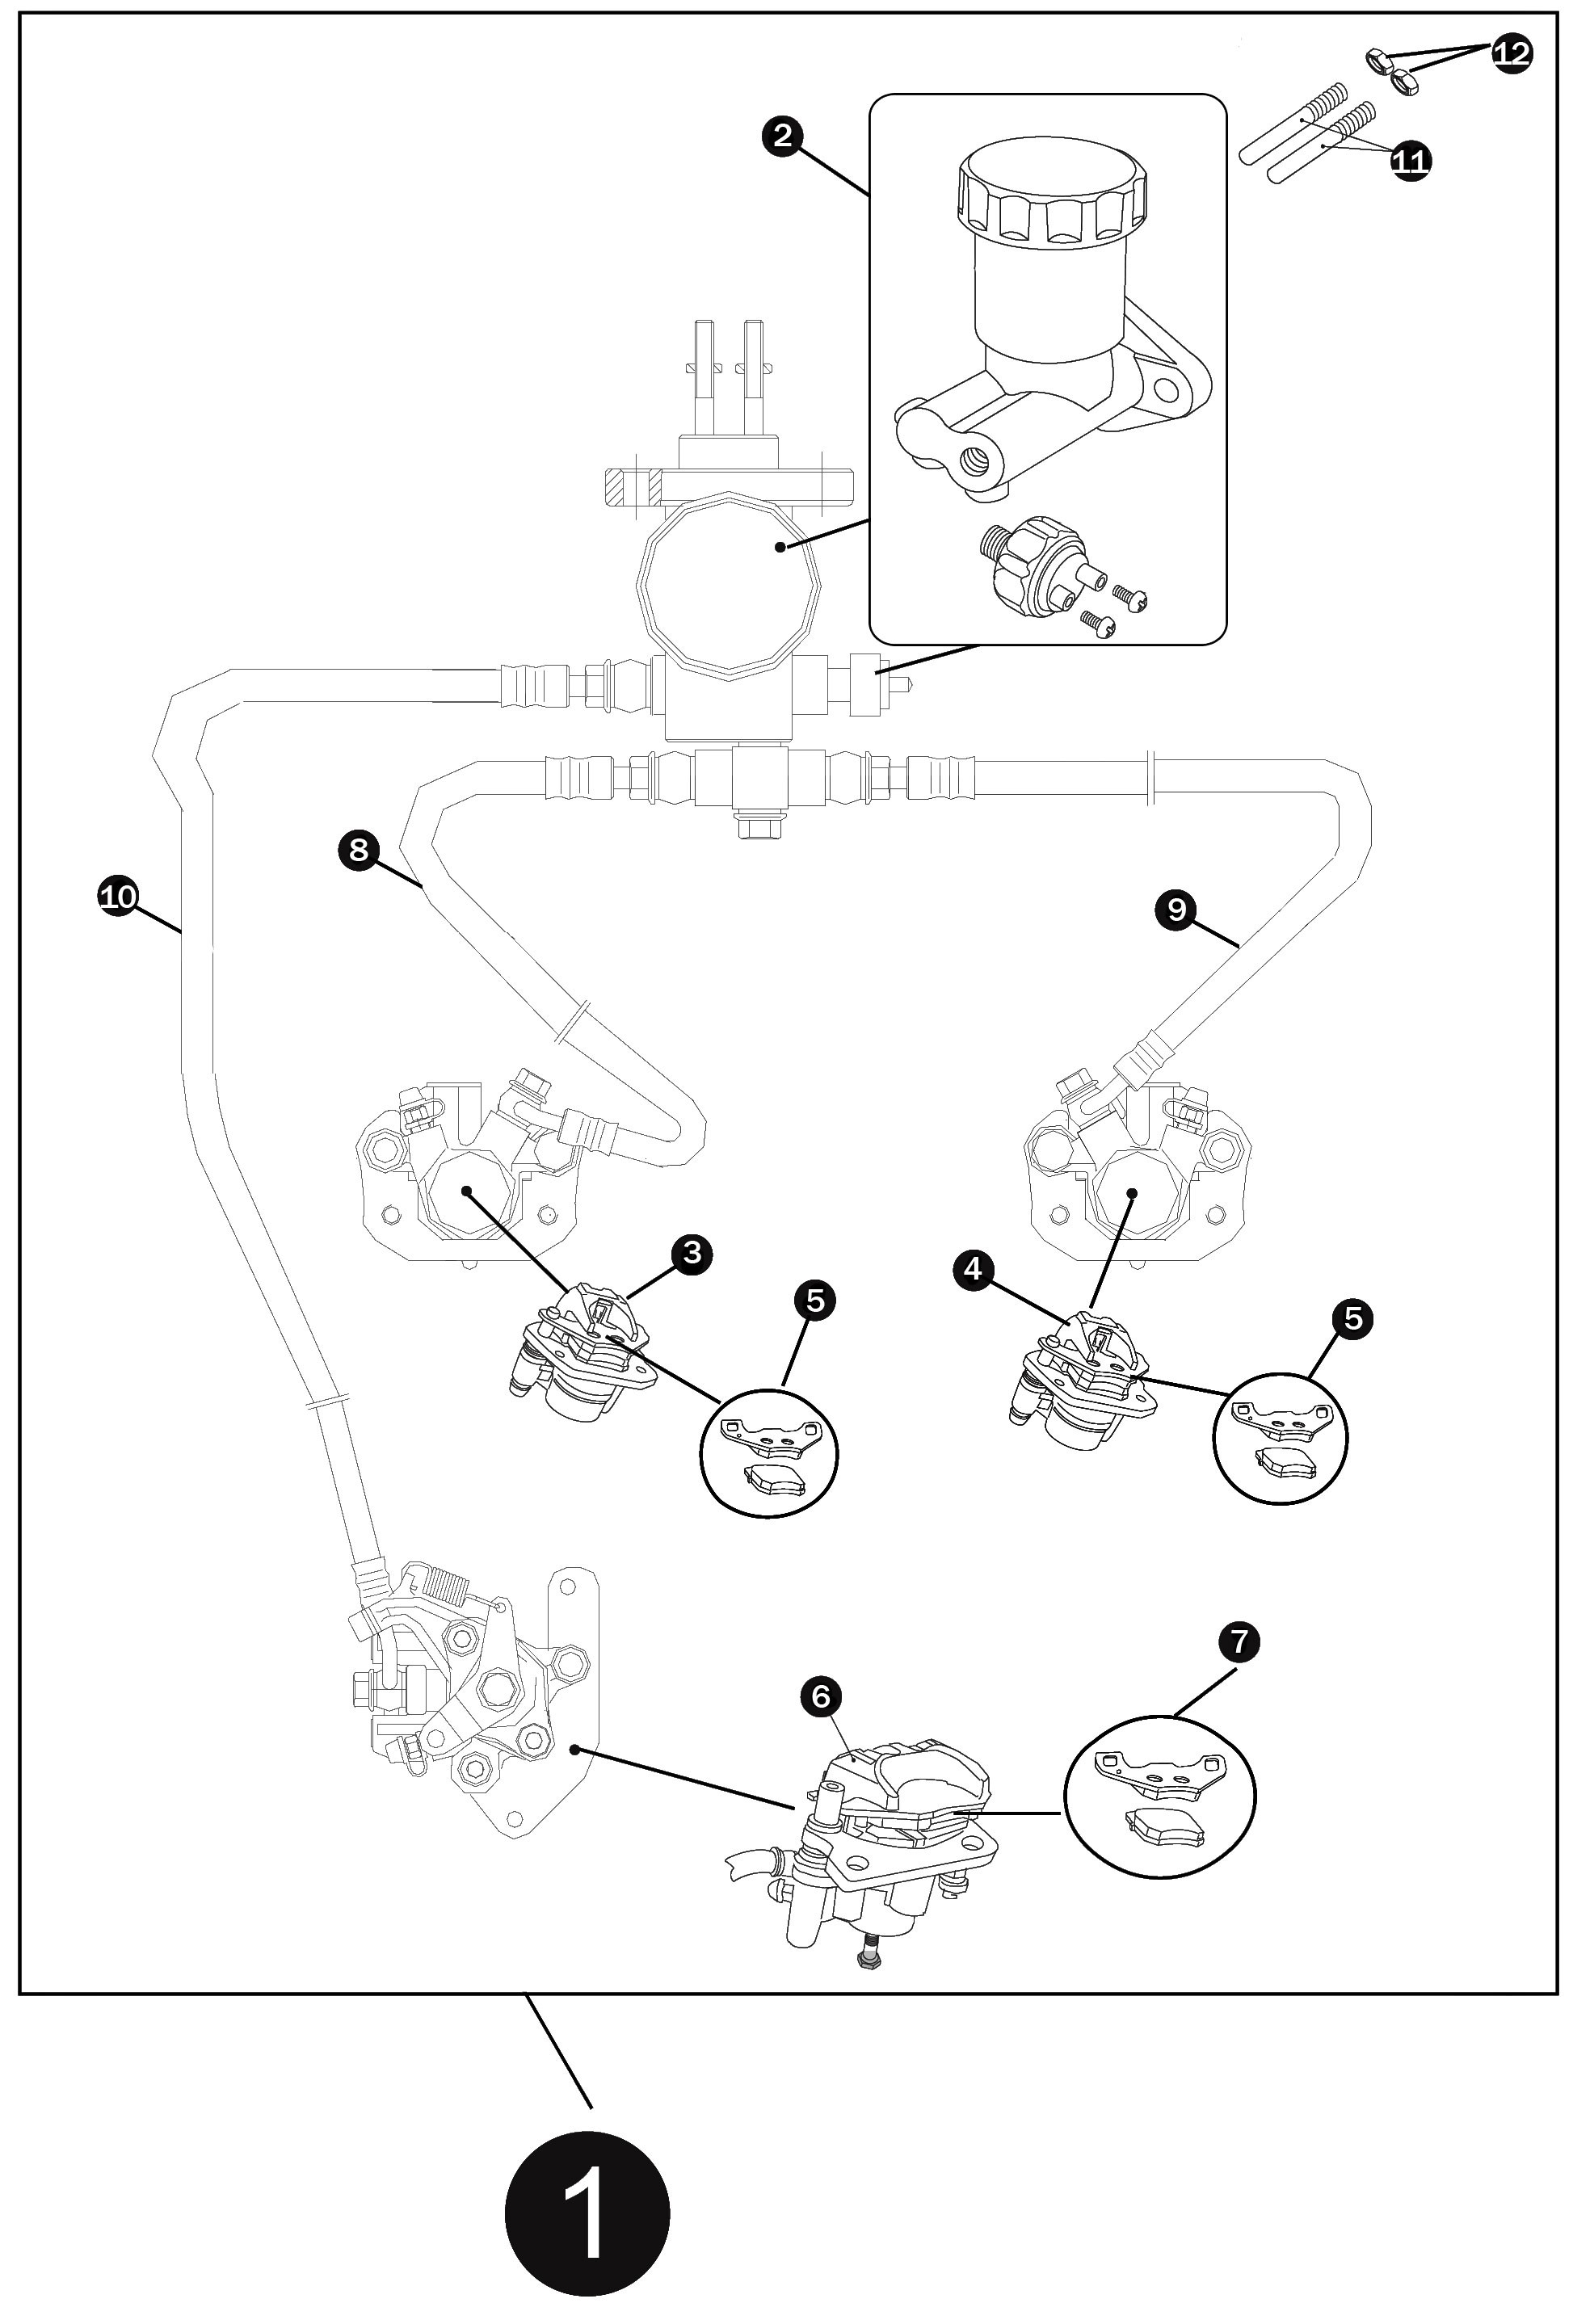 Rear Drum Brake assembly Diagram Trailmaster 150 Xrx Brake assembly Parts Breakdown Of Rear Drum Brake assembly Diagram